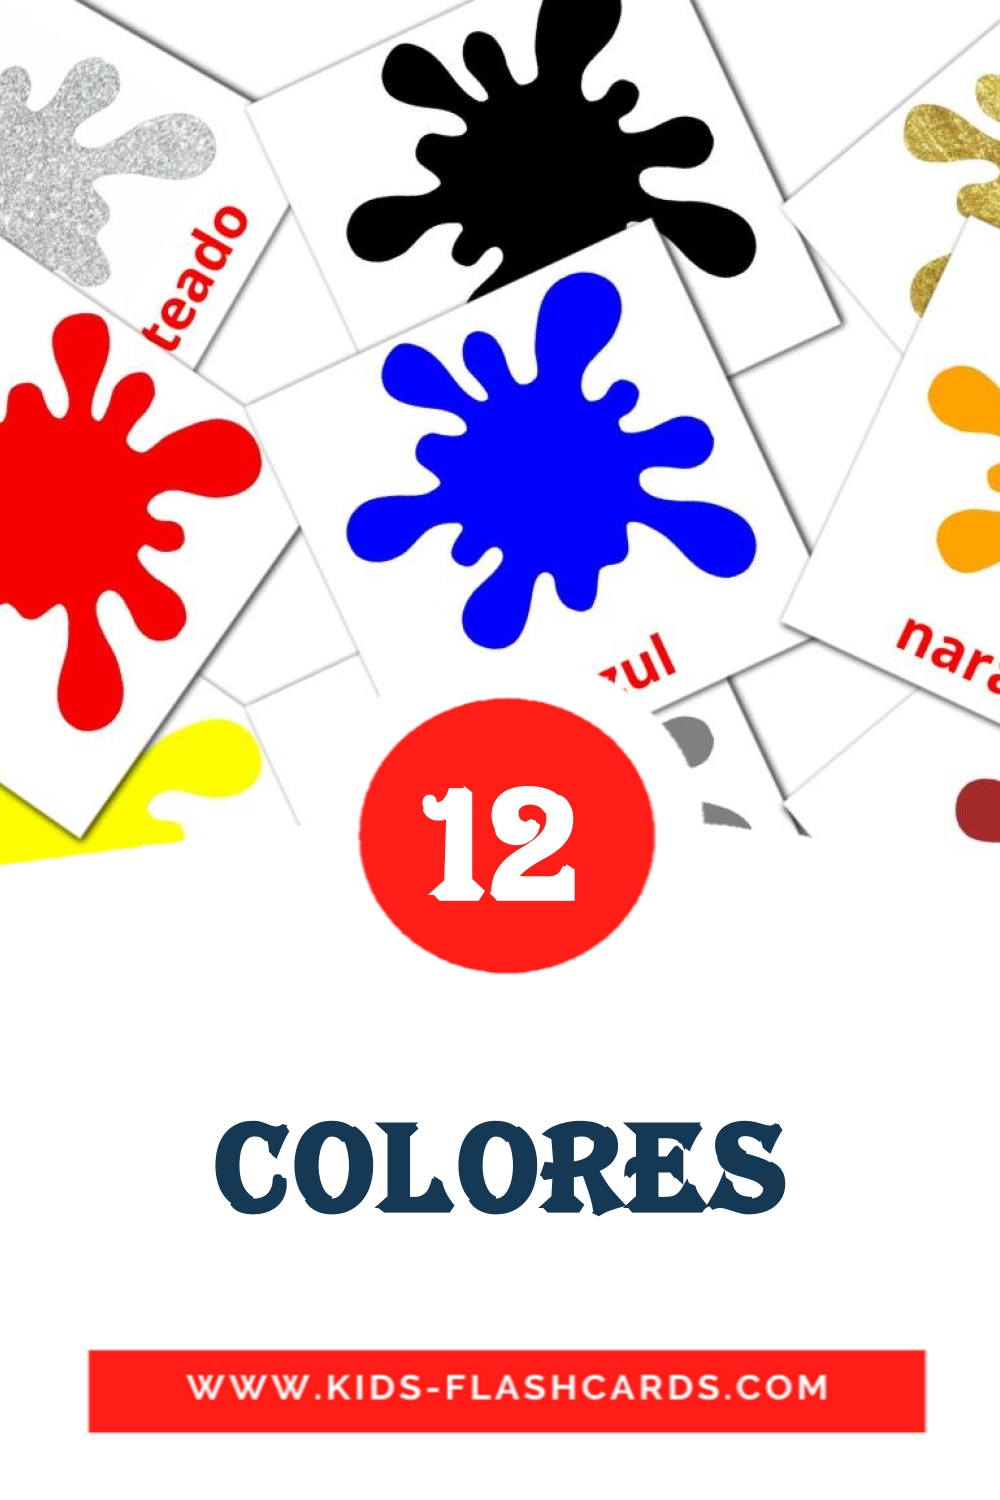 Colores base на испанском для Детского Сада (12 карточек)